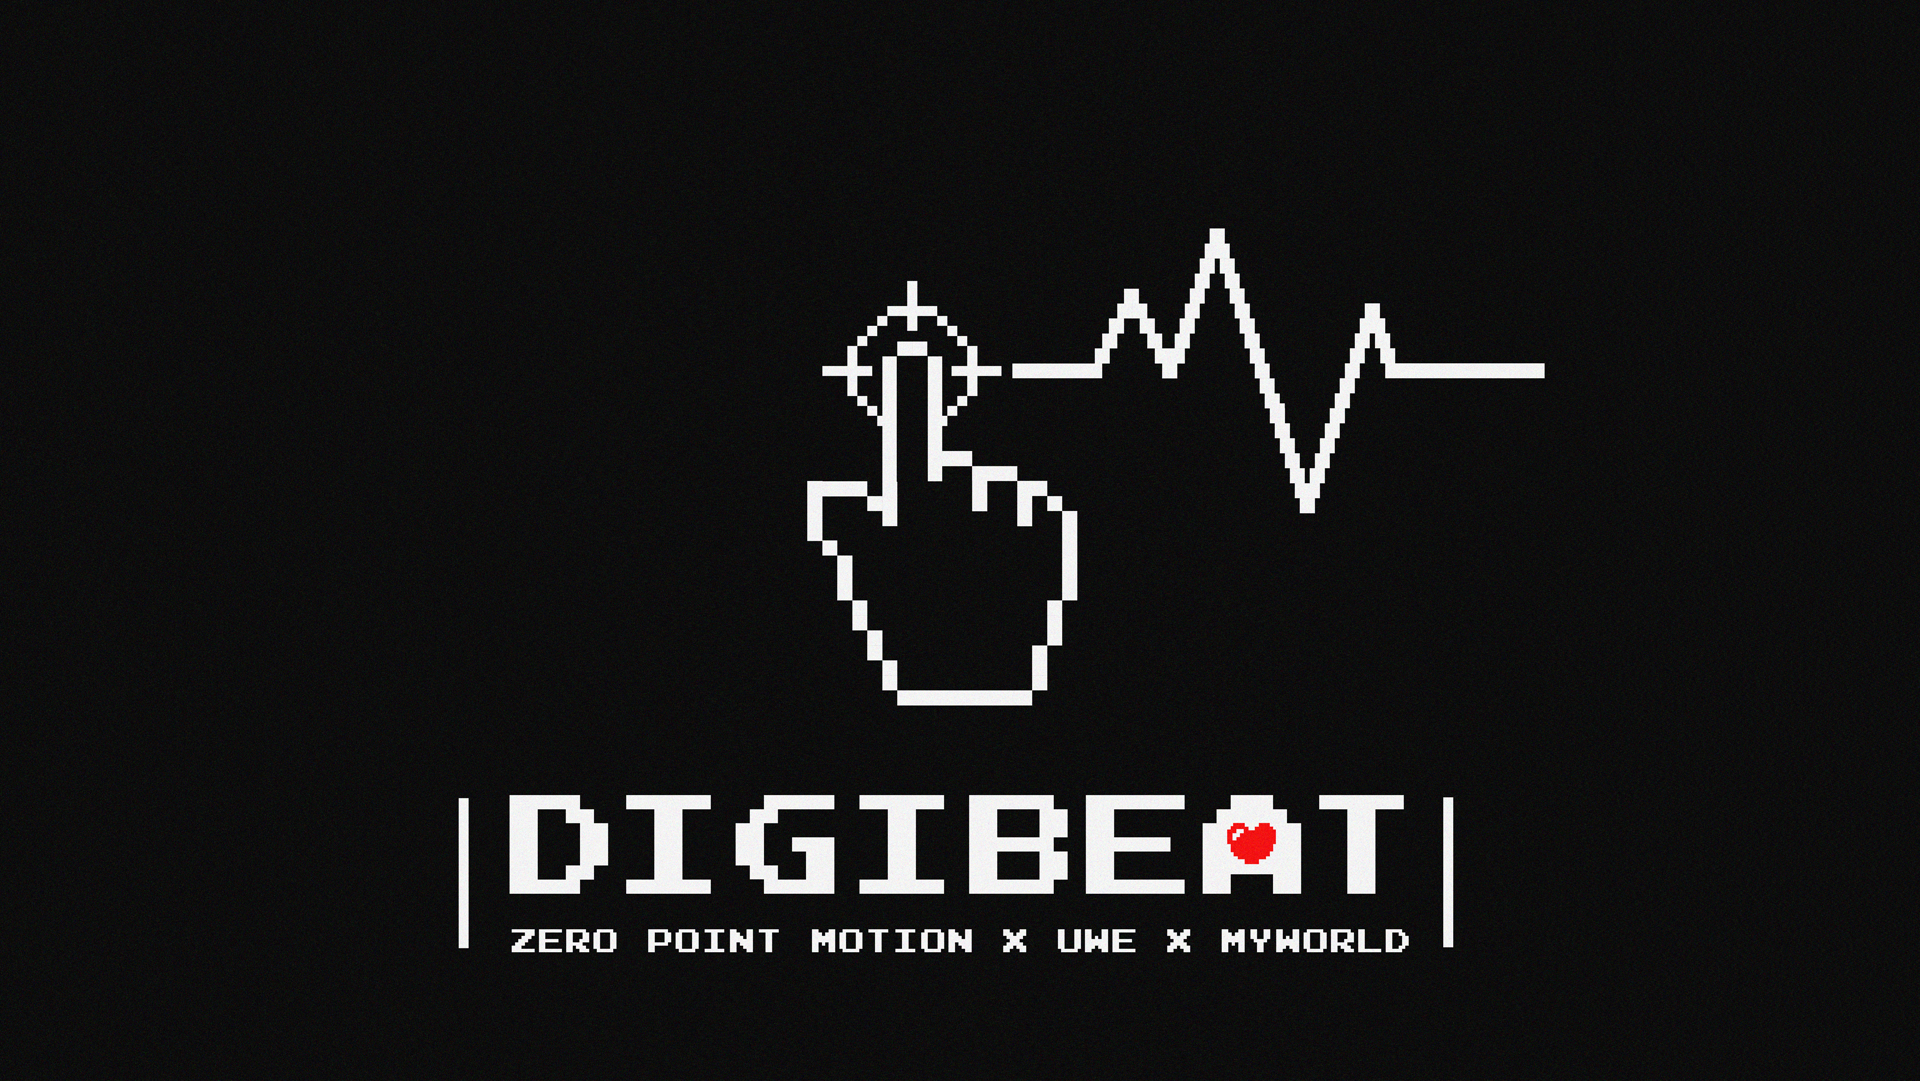 Digibeat logo